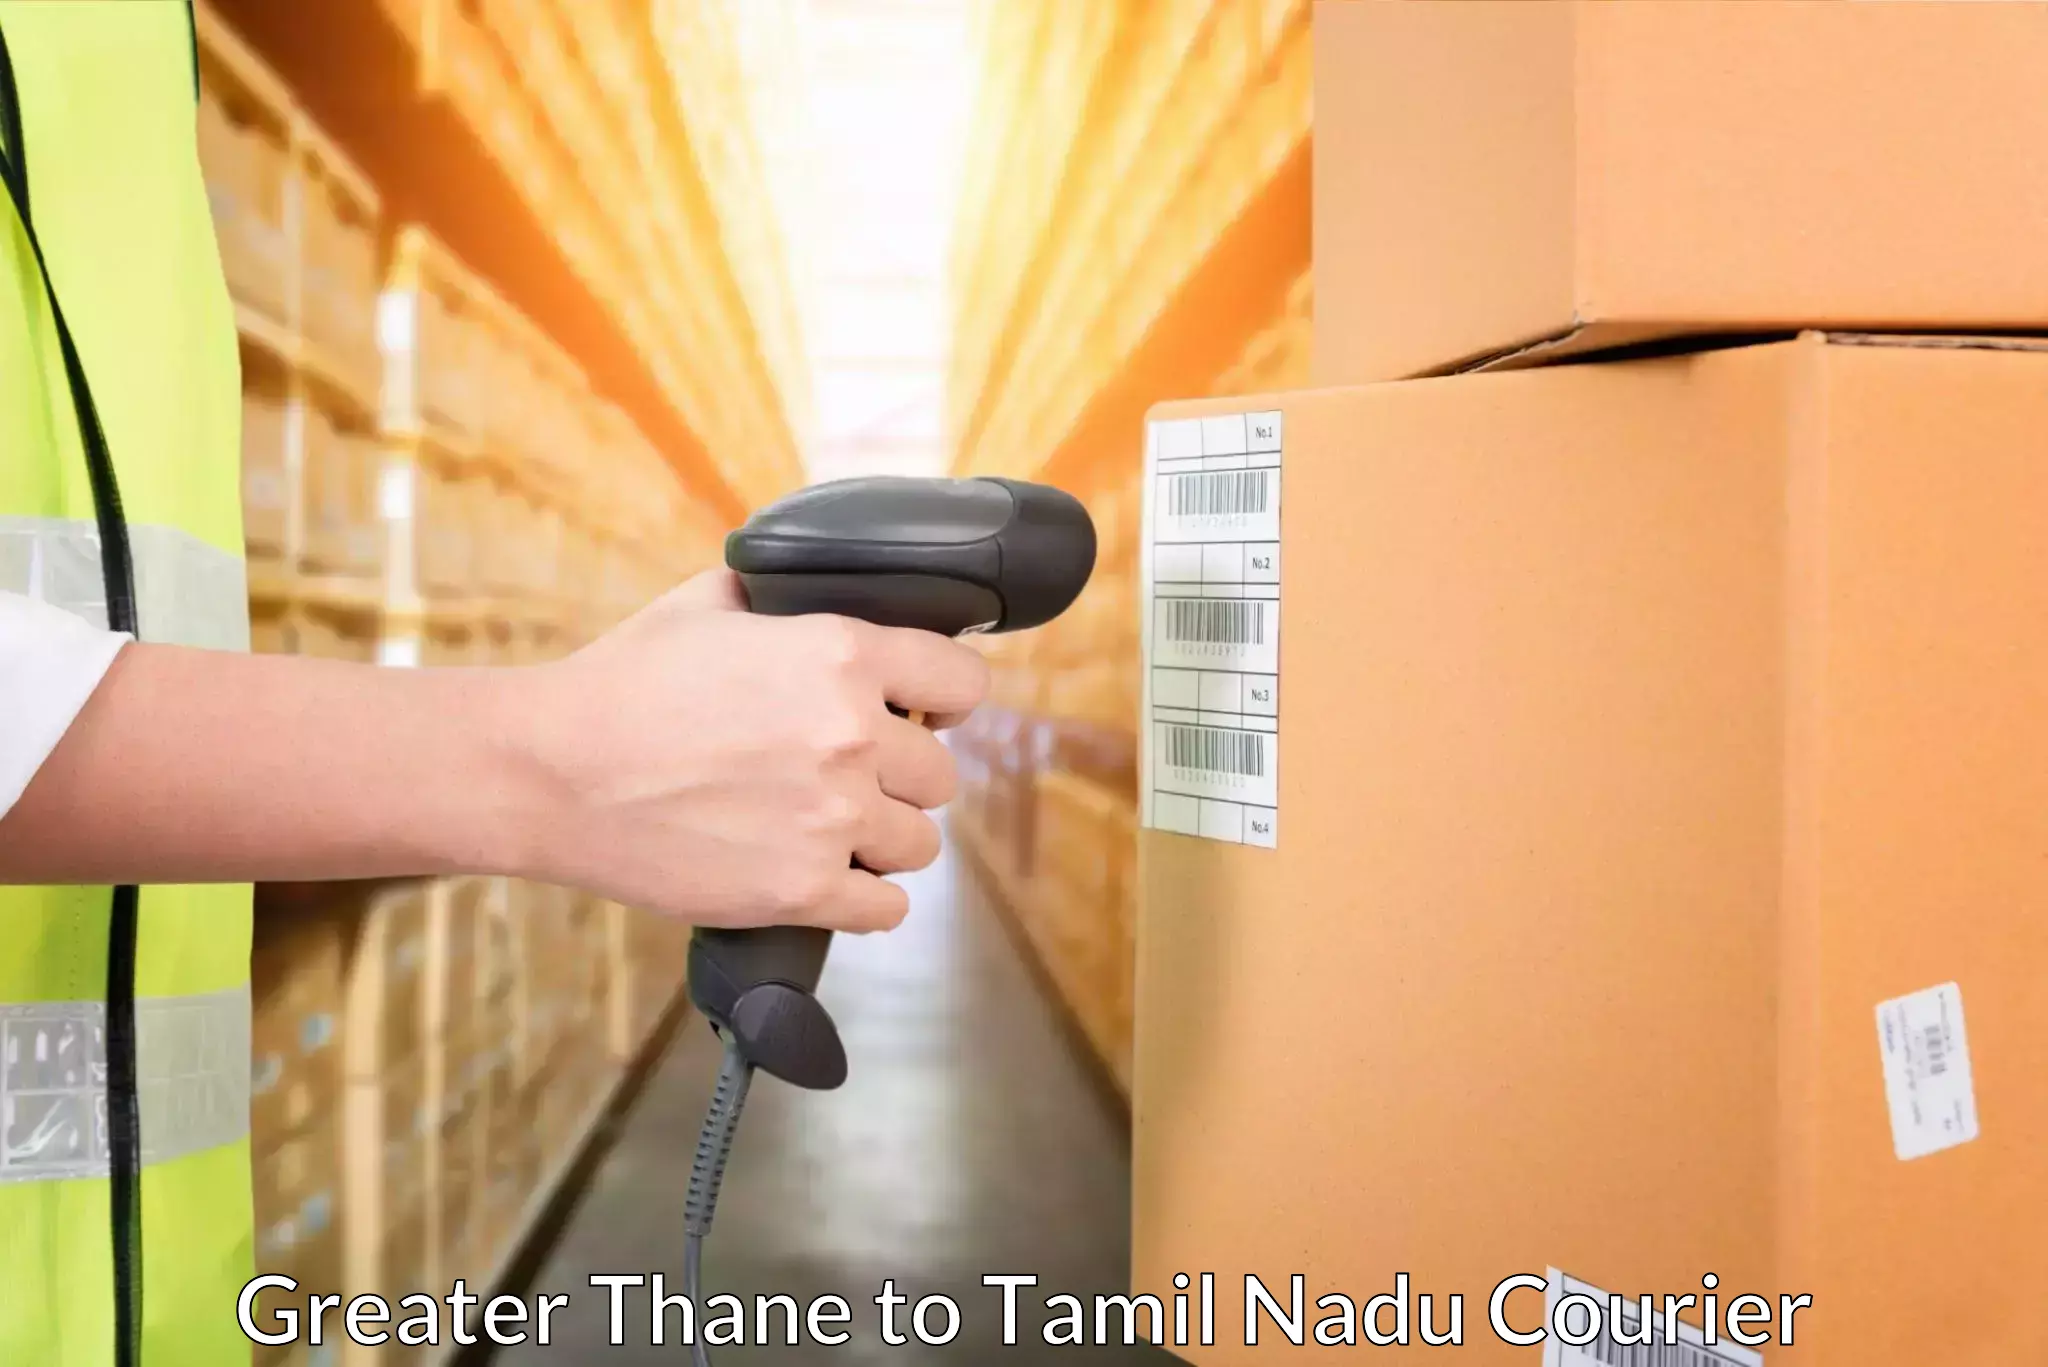 Seamless shipping service Greater Thane to Thirukkattupalli